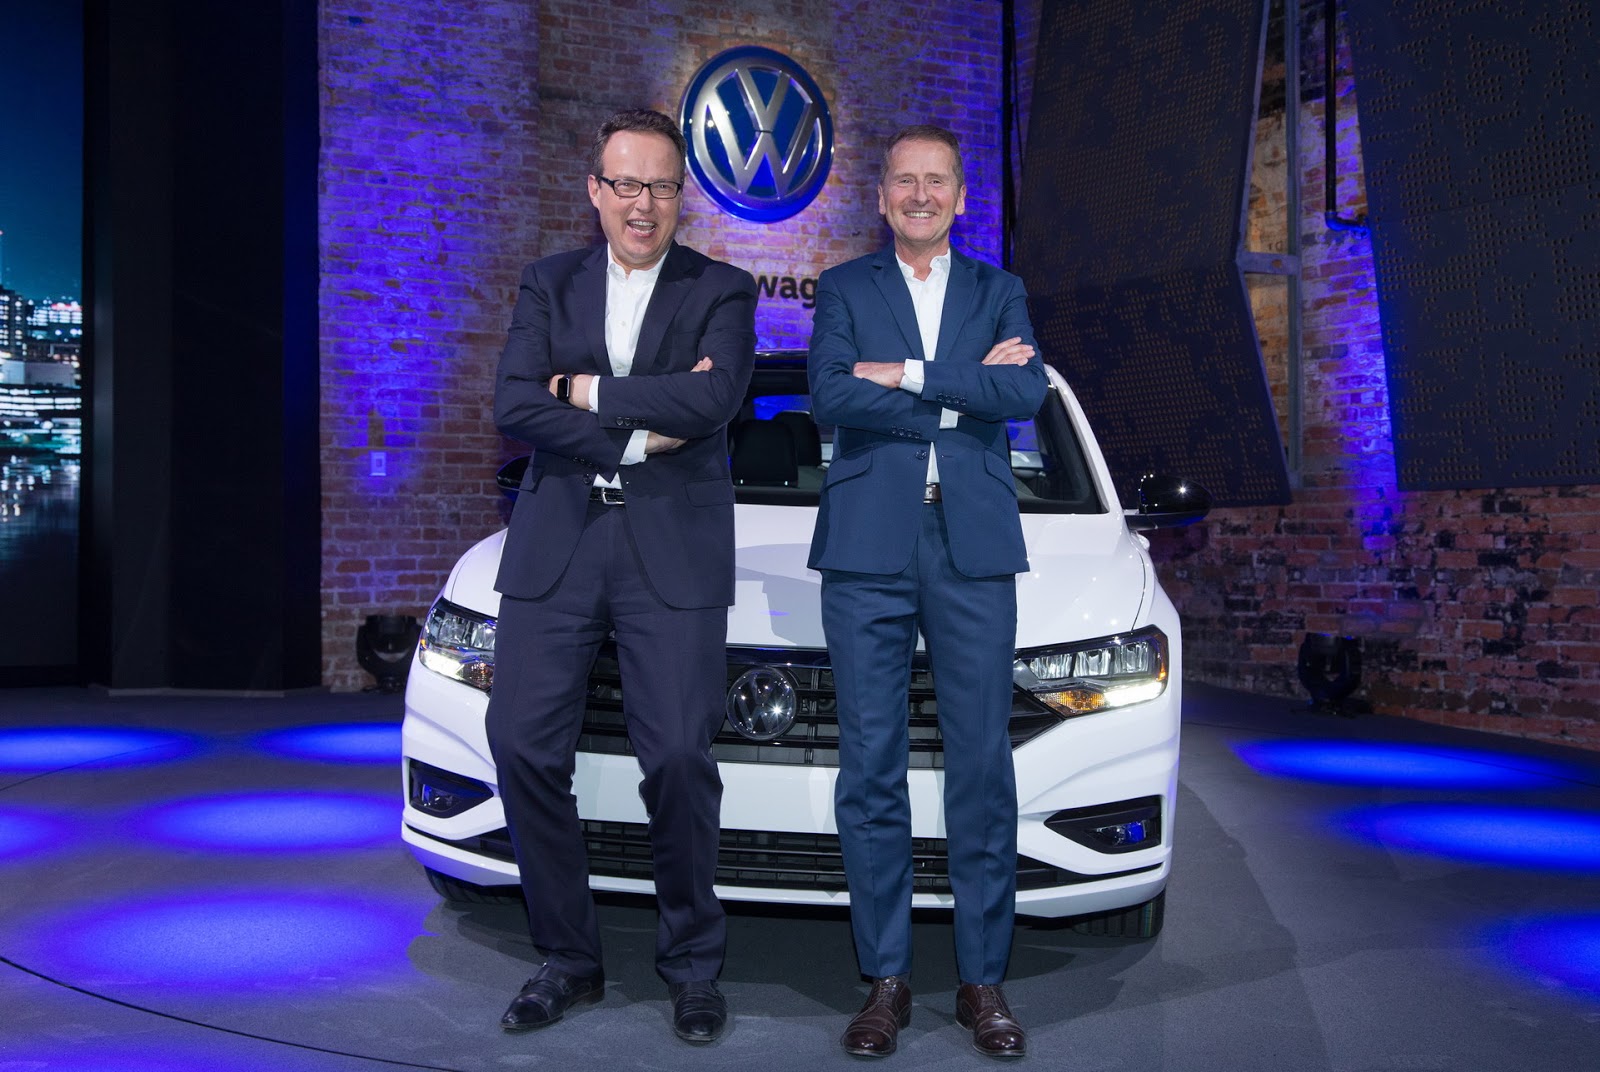 Yeni 2019 VW Jetta Amerikan Versiyon resim galerisi